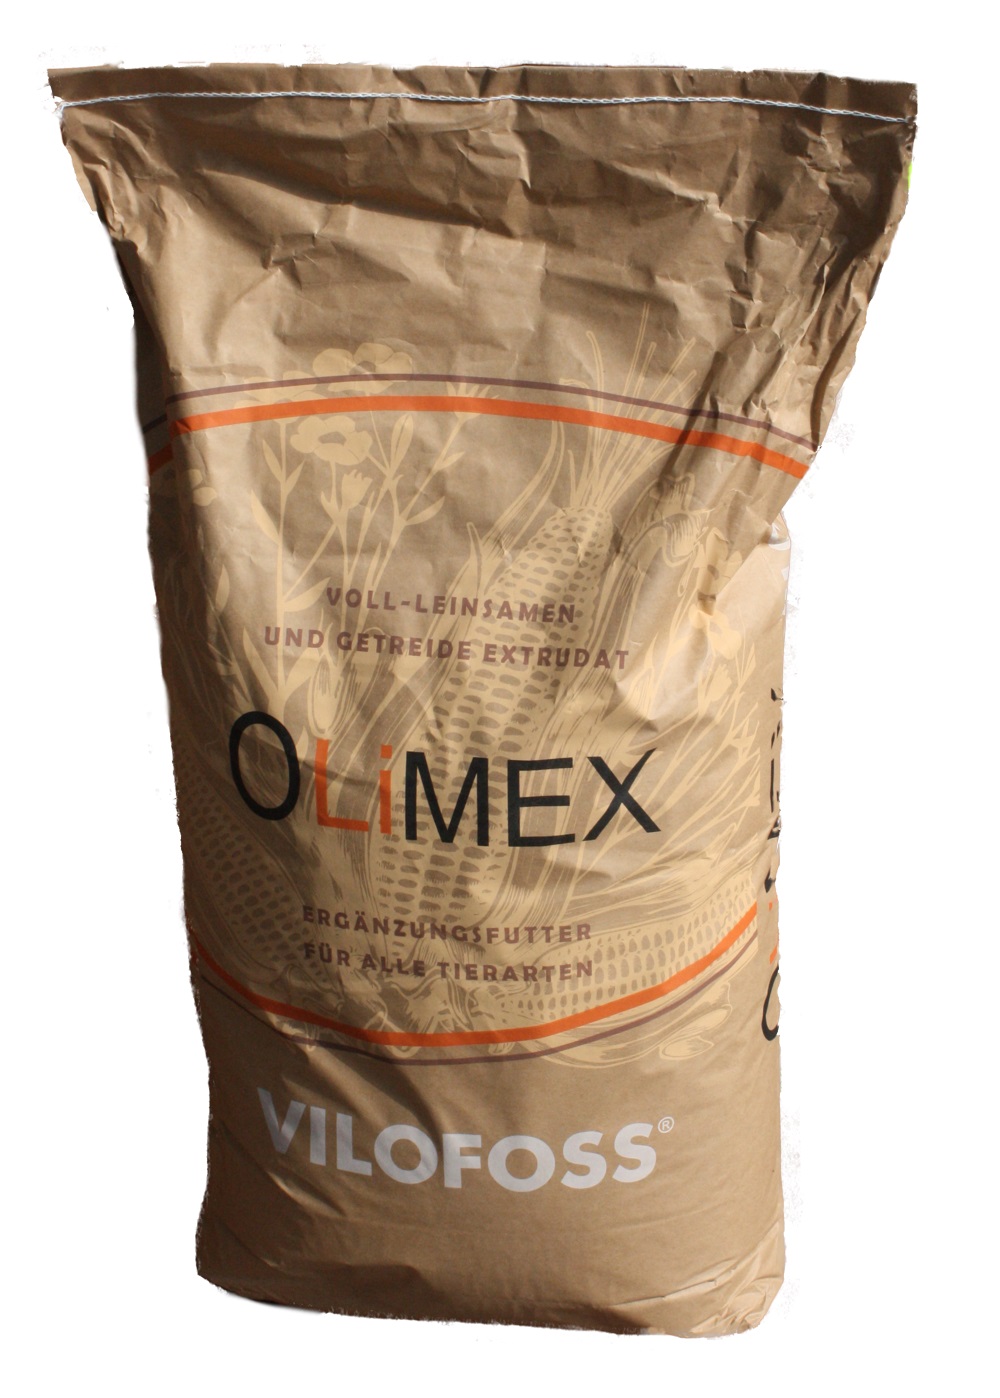 Olimex 50 Leinsamen-Mais-Extrudat  ges. 25kg